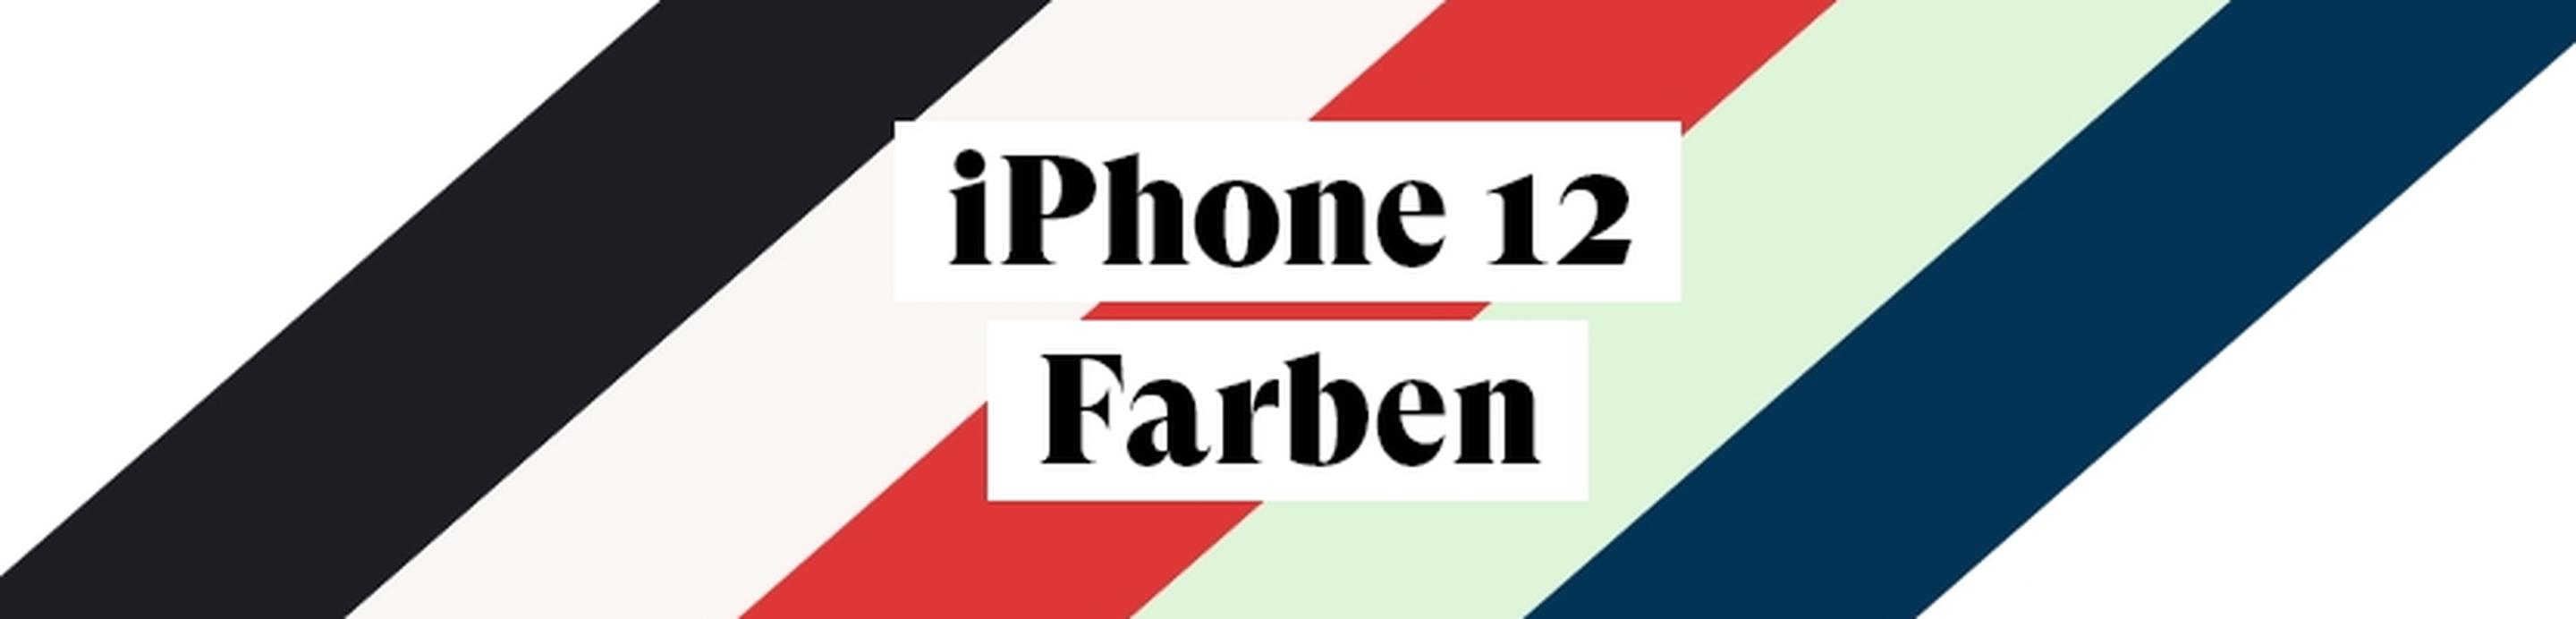 iphone12-farben